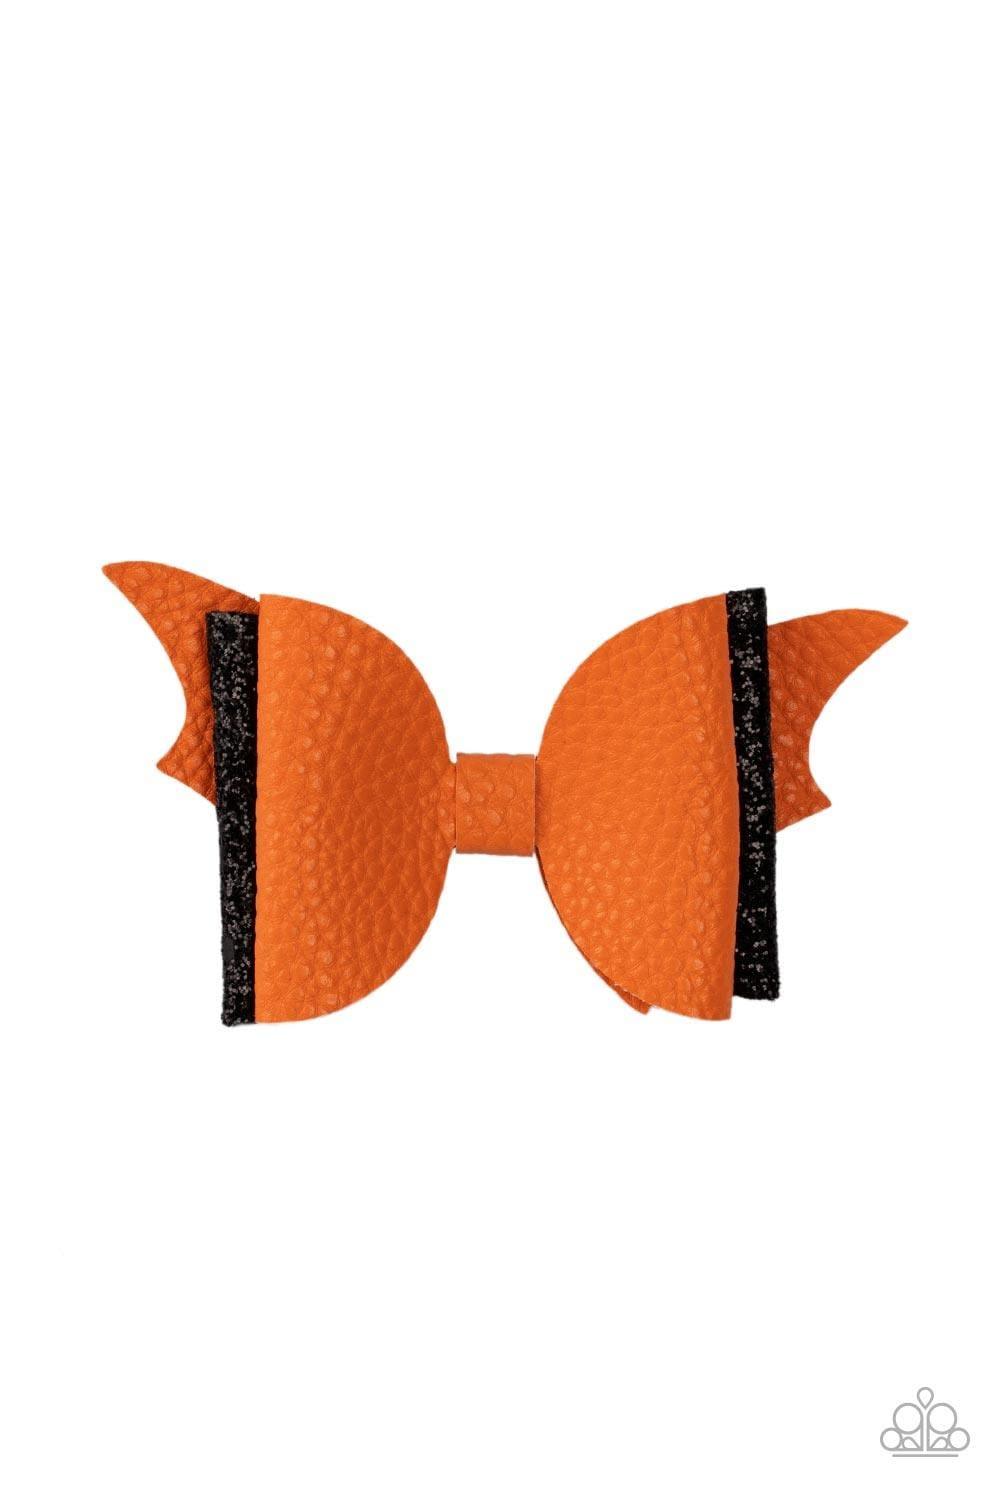 Paparazzi Accessories - Spook-taculer, Spook-taculer - Orange Hair Bow - Bling by JessieK